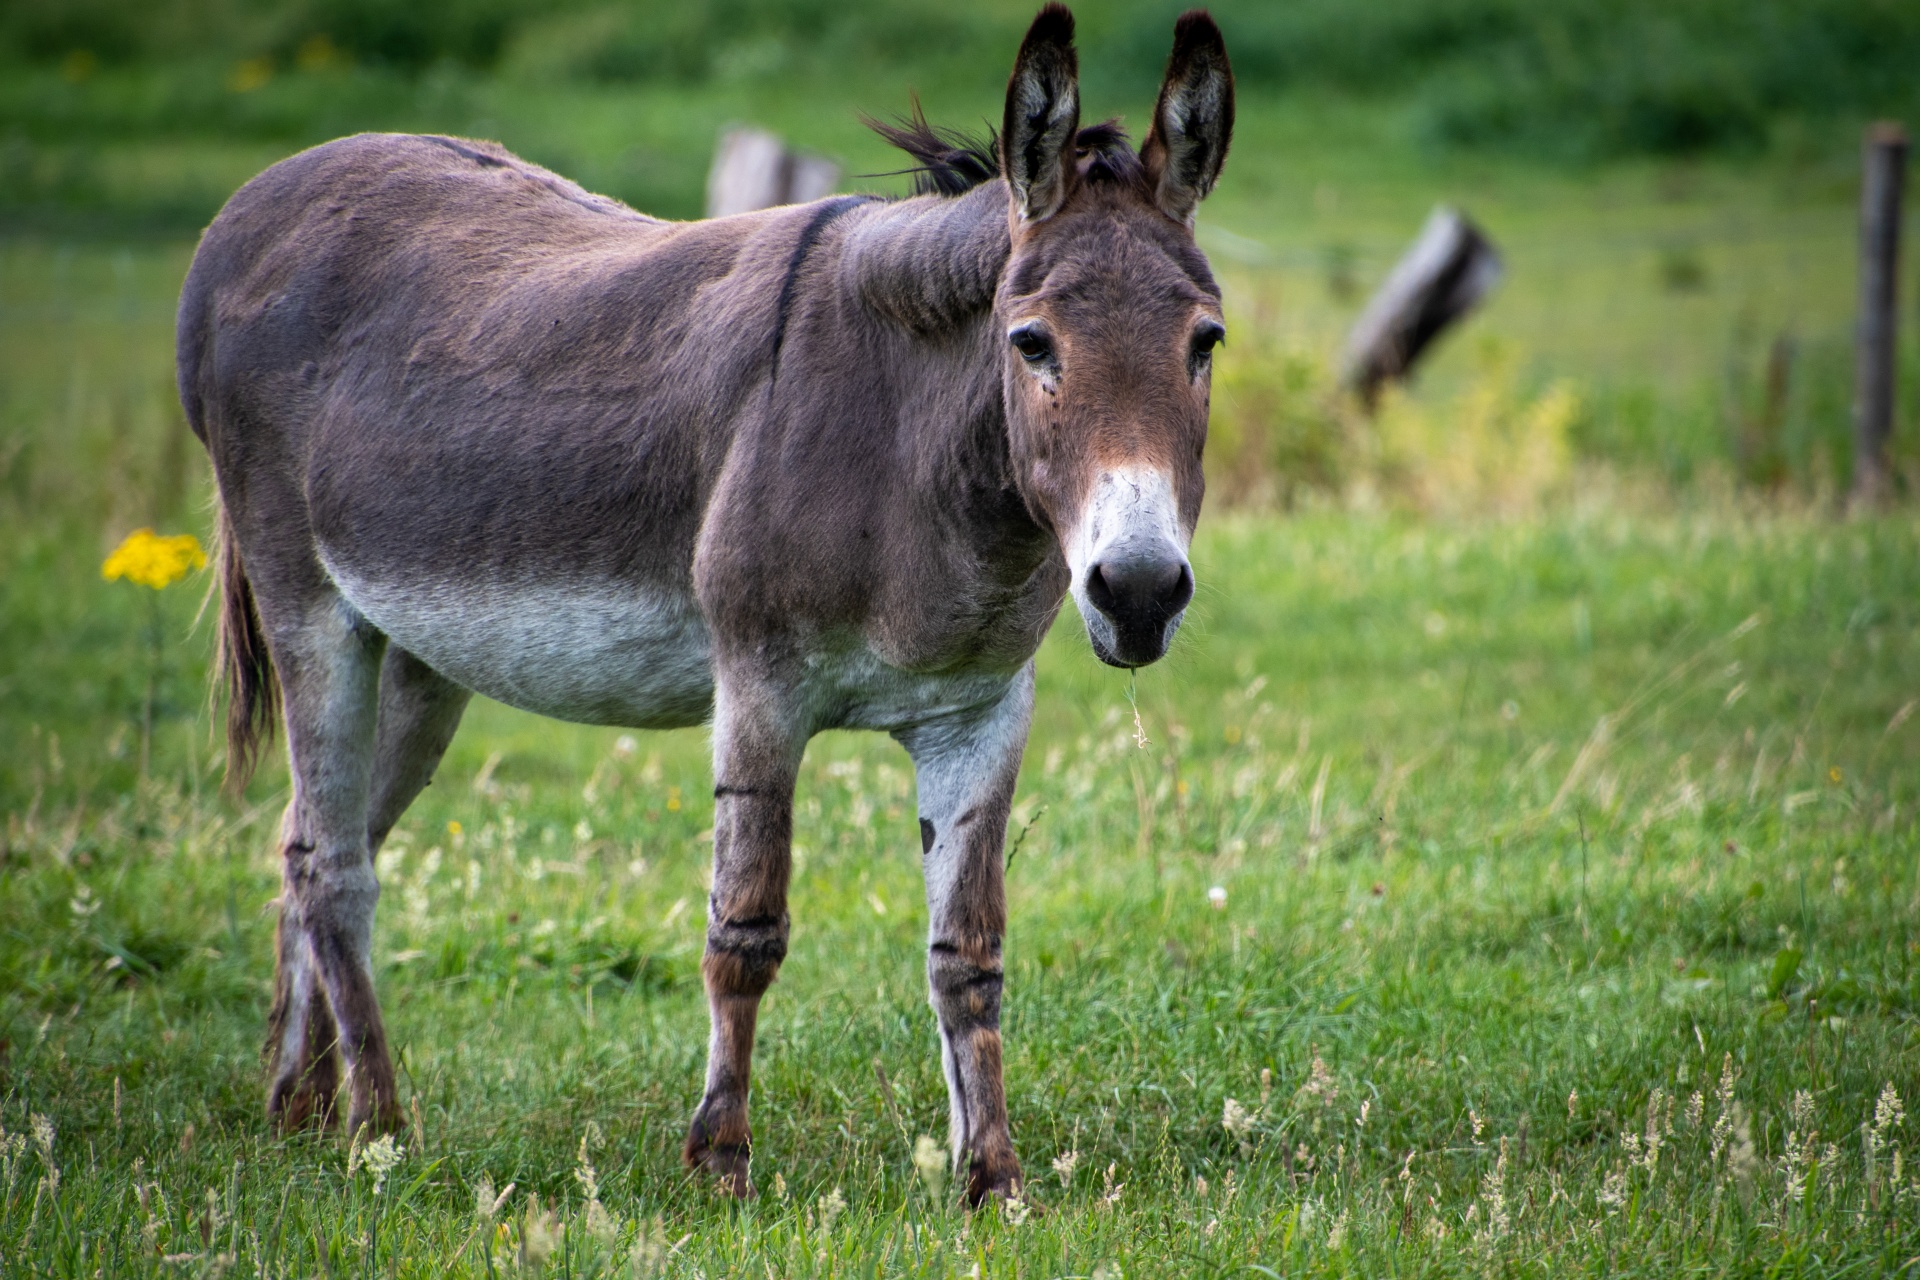 Donkey in the meadow